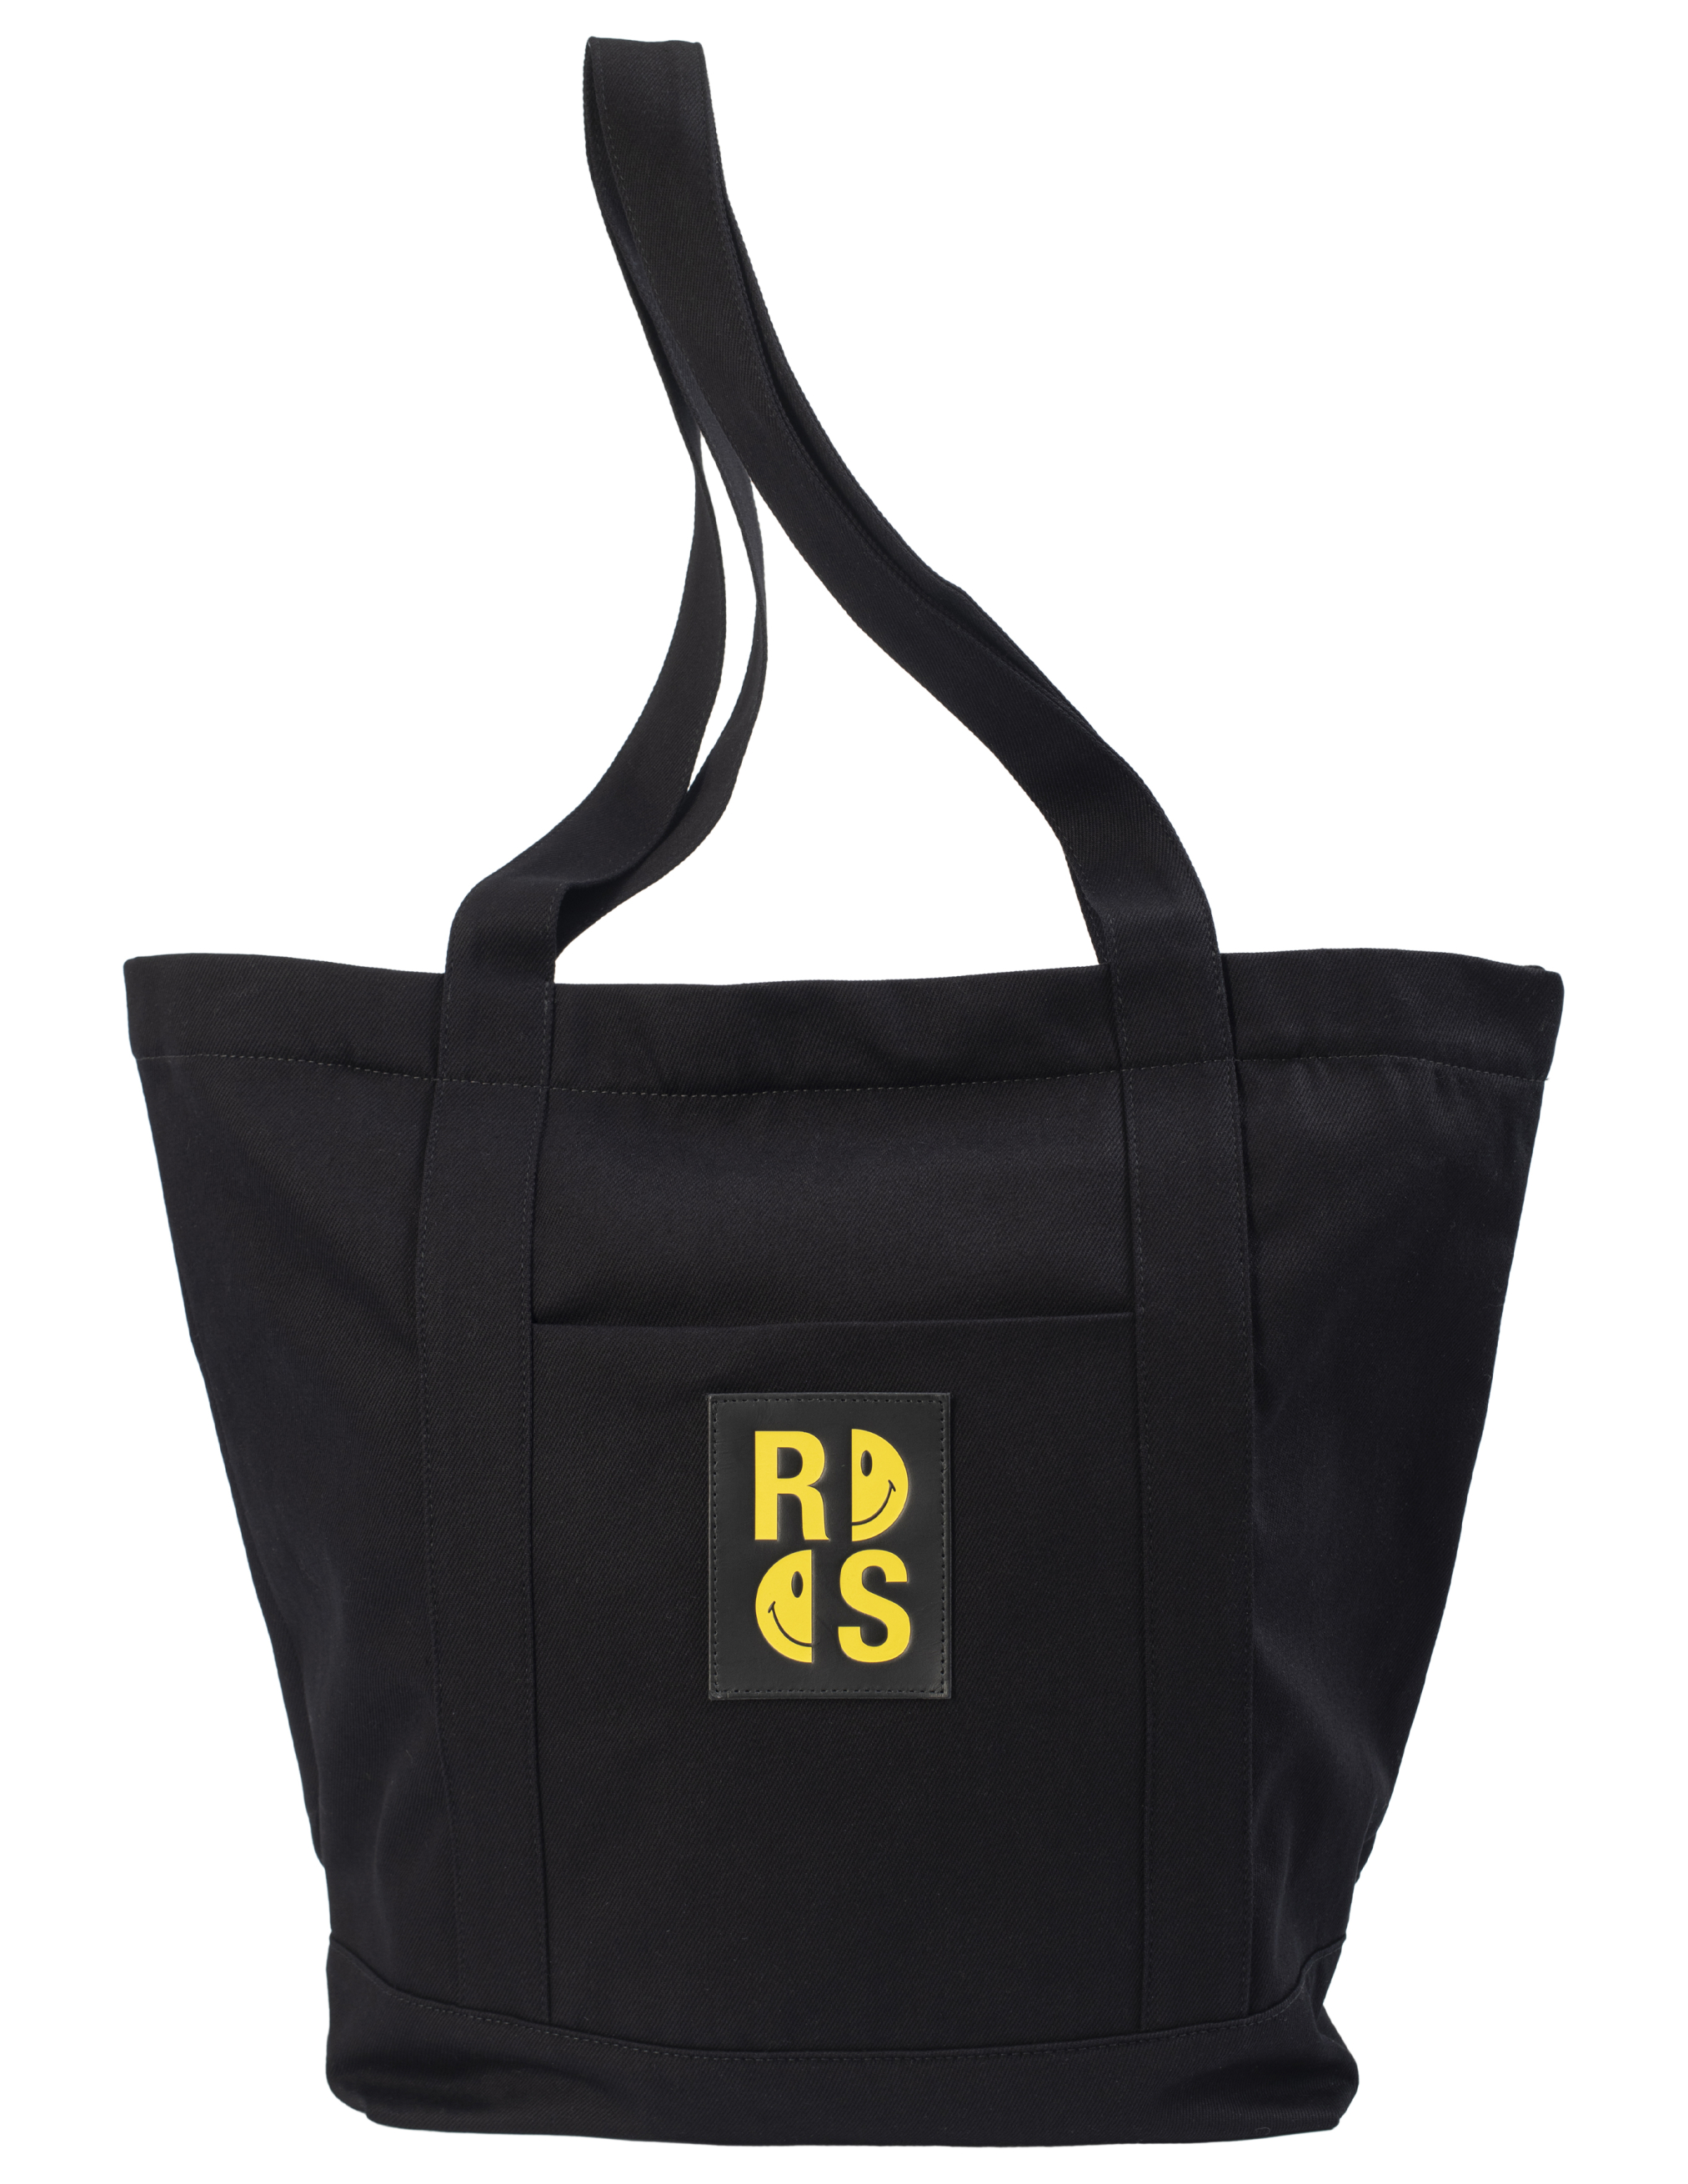 Джинсовая сумка-шоппер Raf Simons x Smiley с патчем Raf Simons 224-935-11000-0099, размер One Size - фото 1